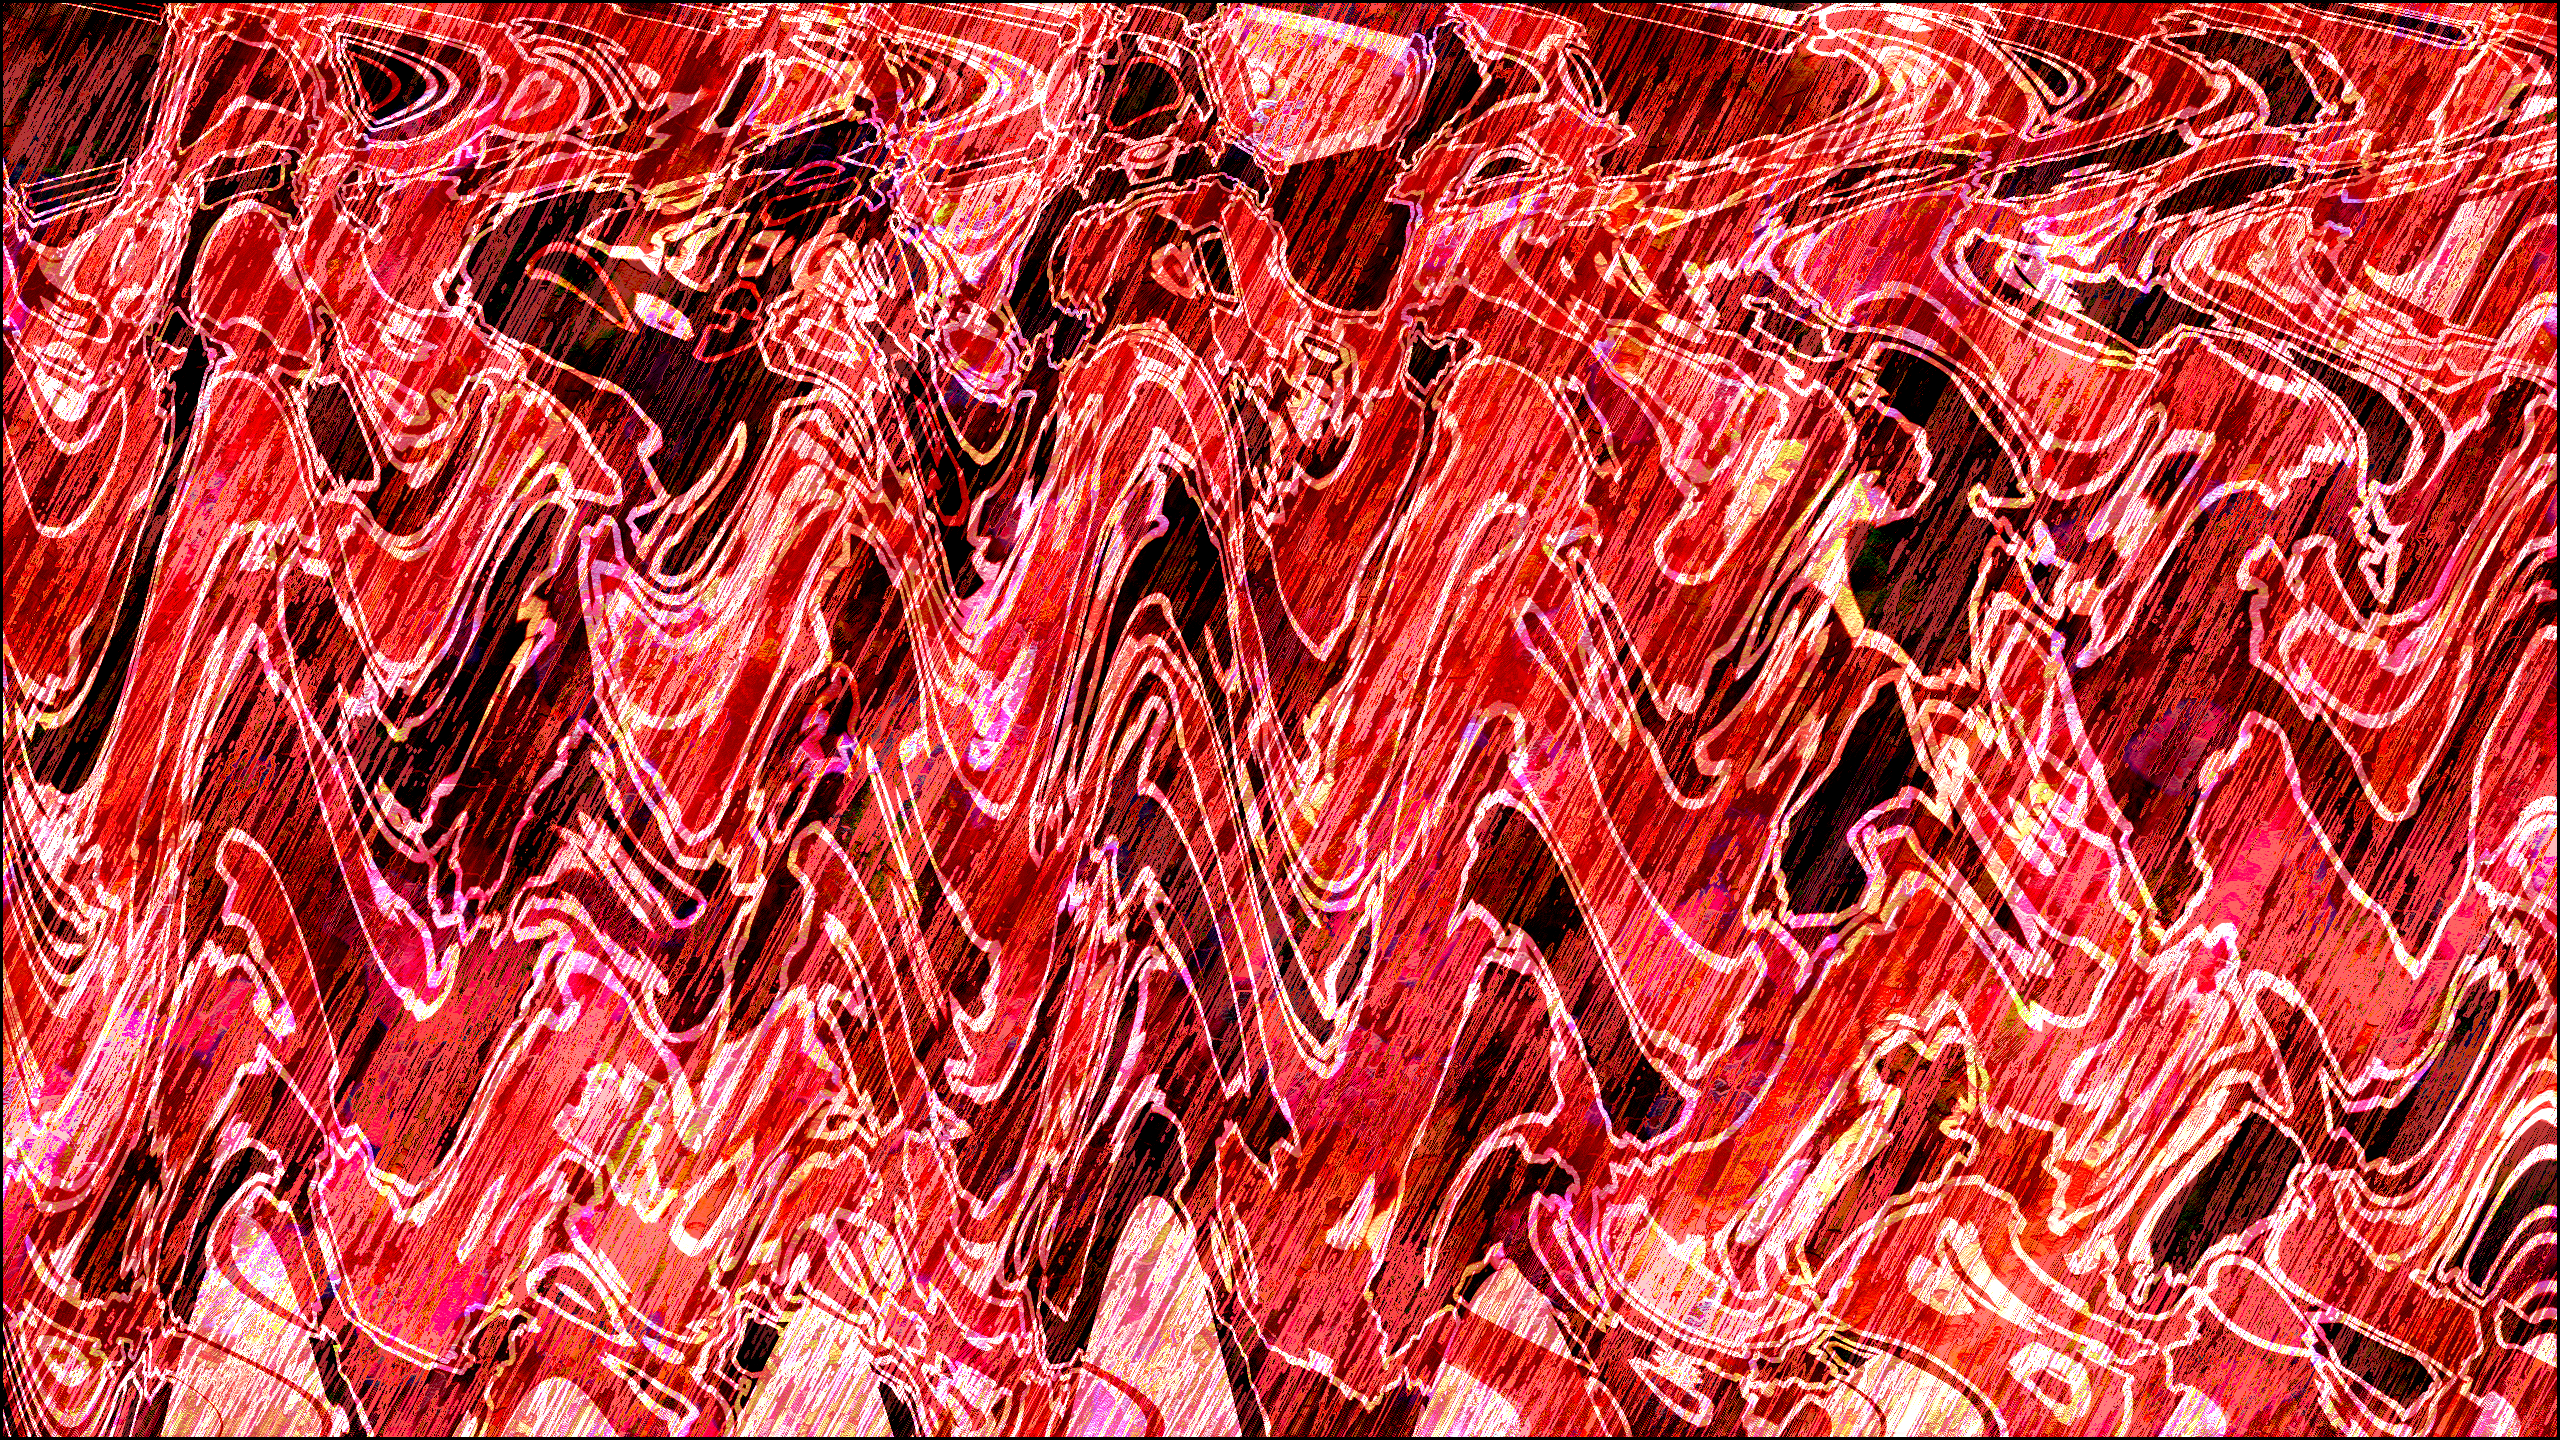 Abstract Digital Art Trippy Brightness 2560x1440